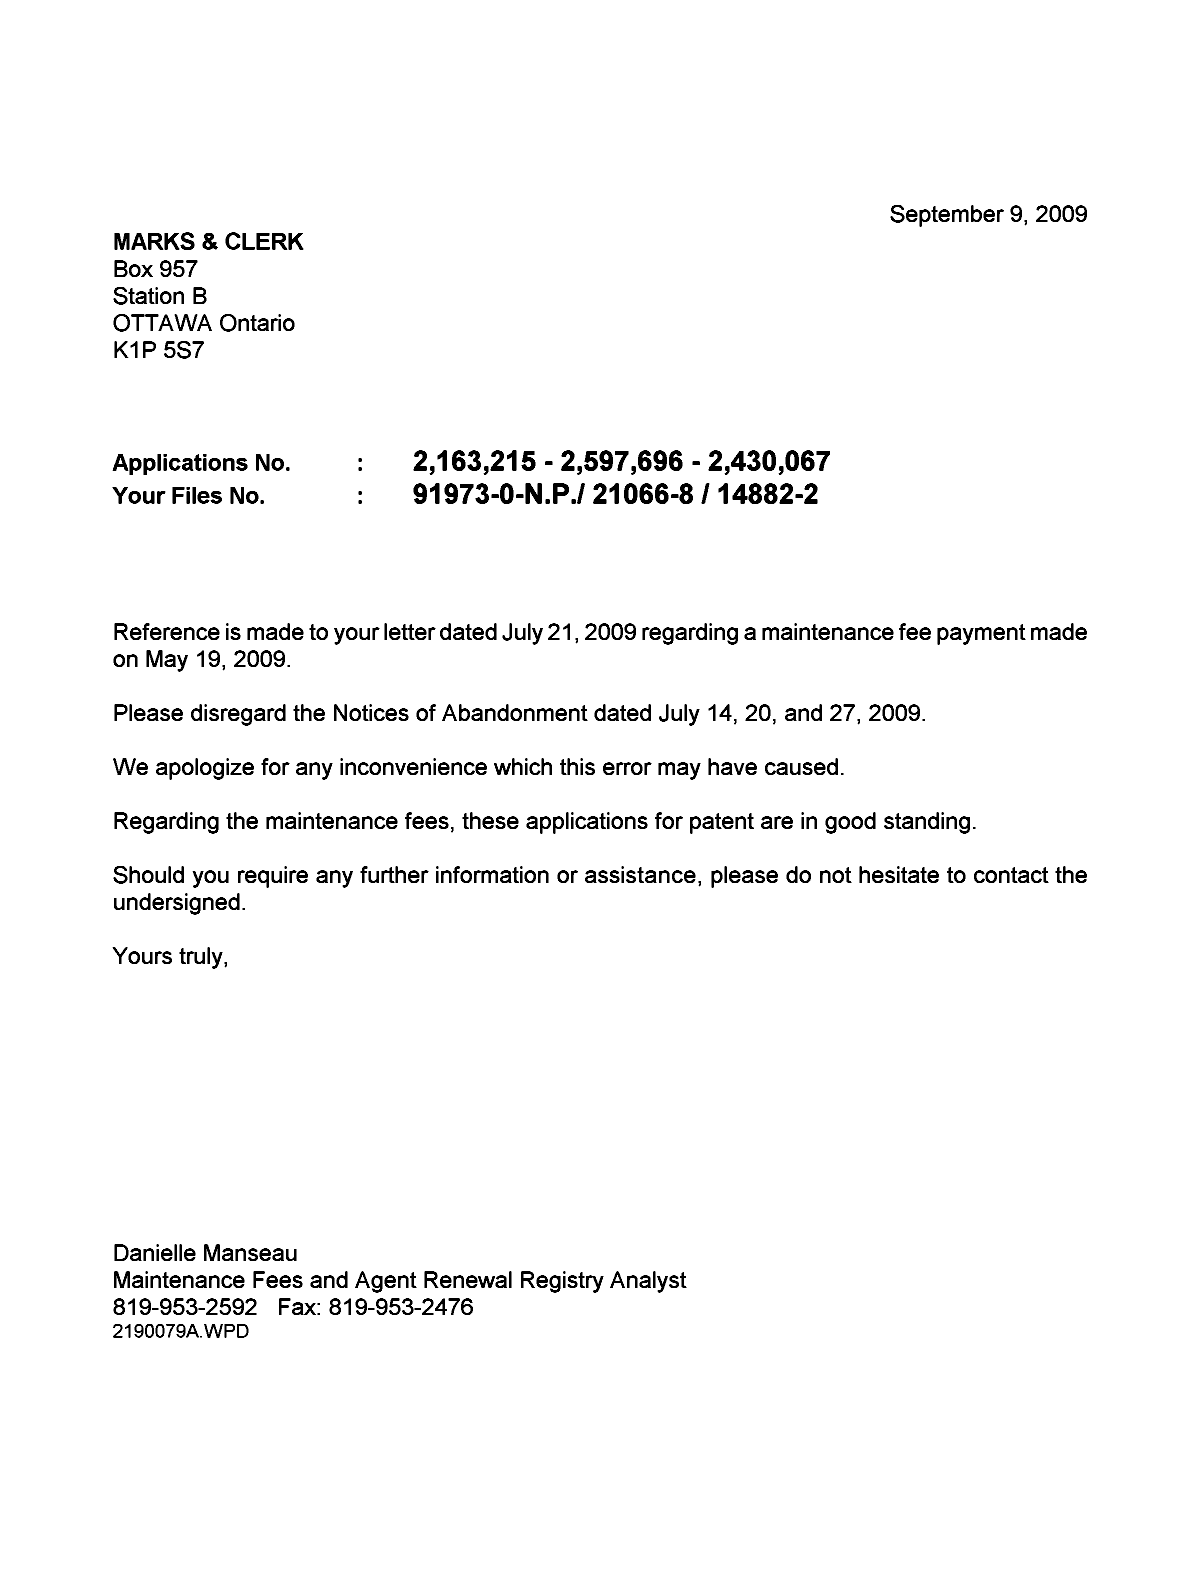 Canadian Patent Document 2430067. Correspondence 20090909. Image 1 of 1